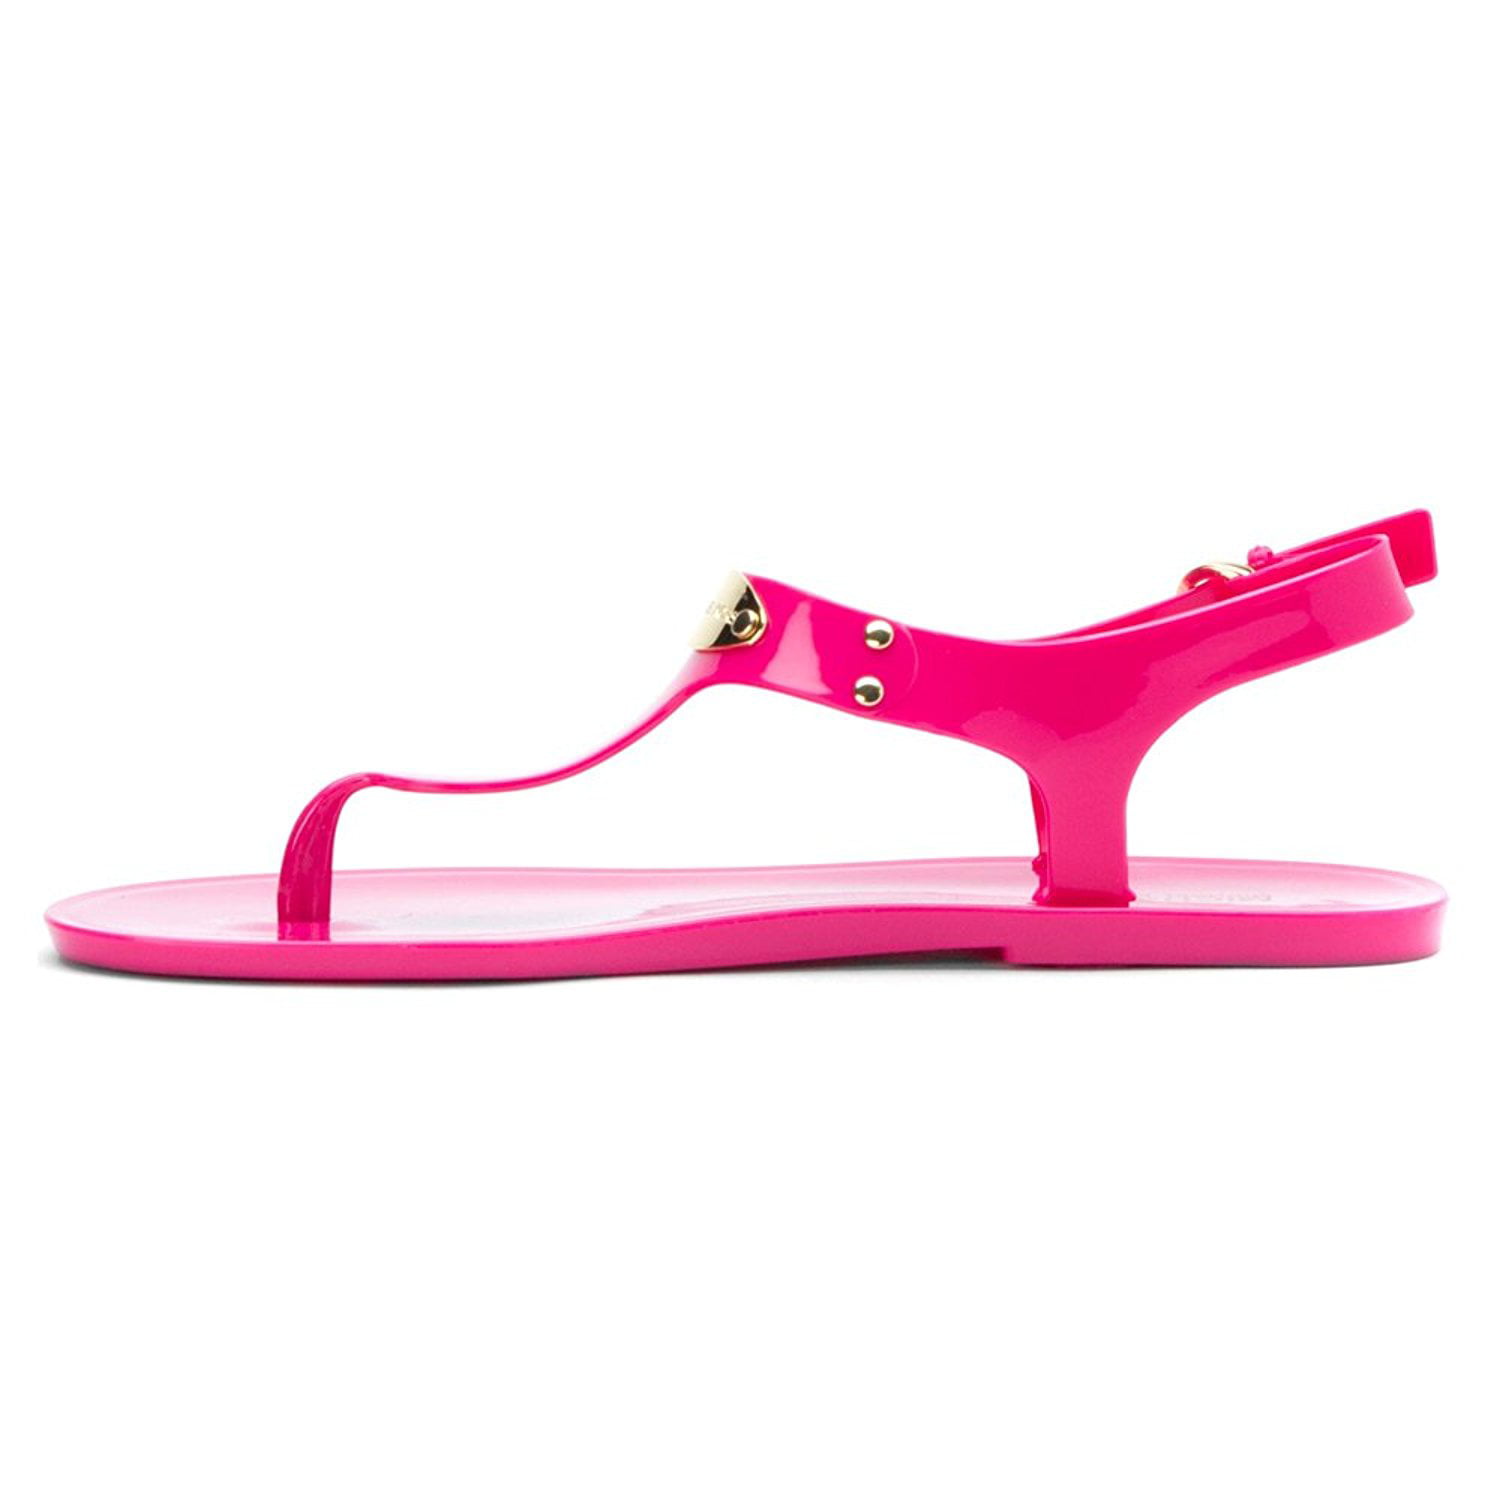 michael kors pink jelly sandals